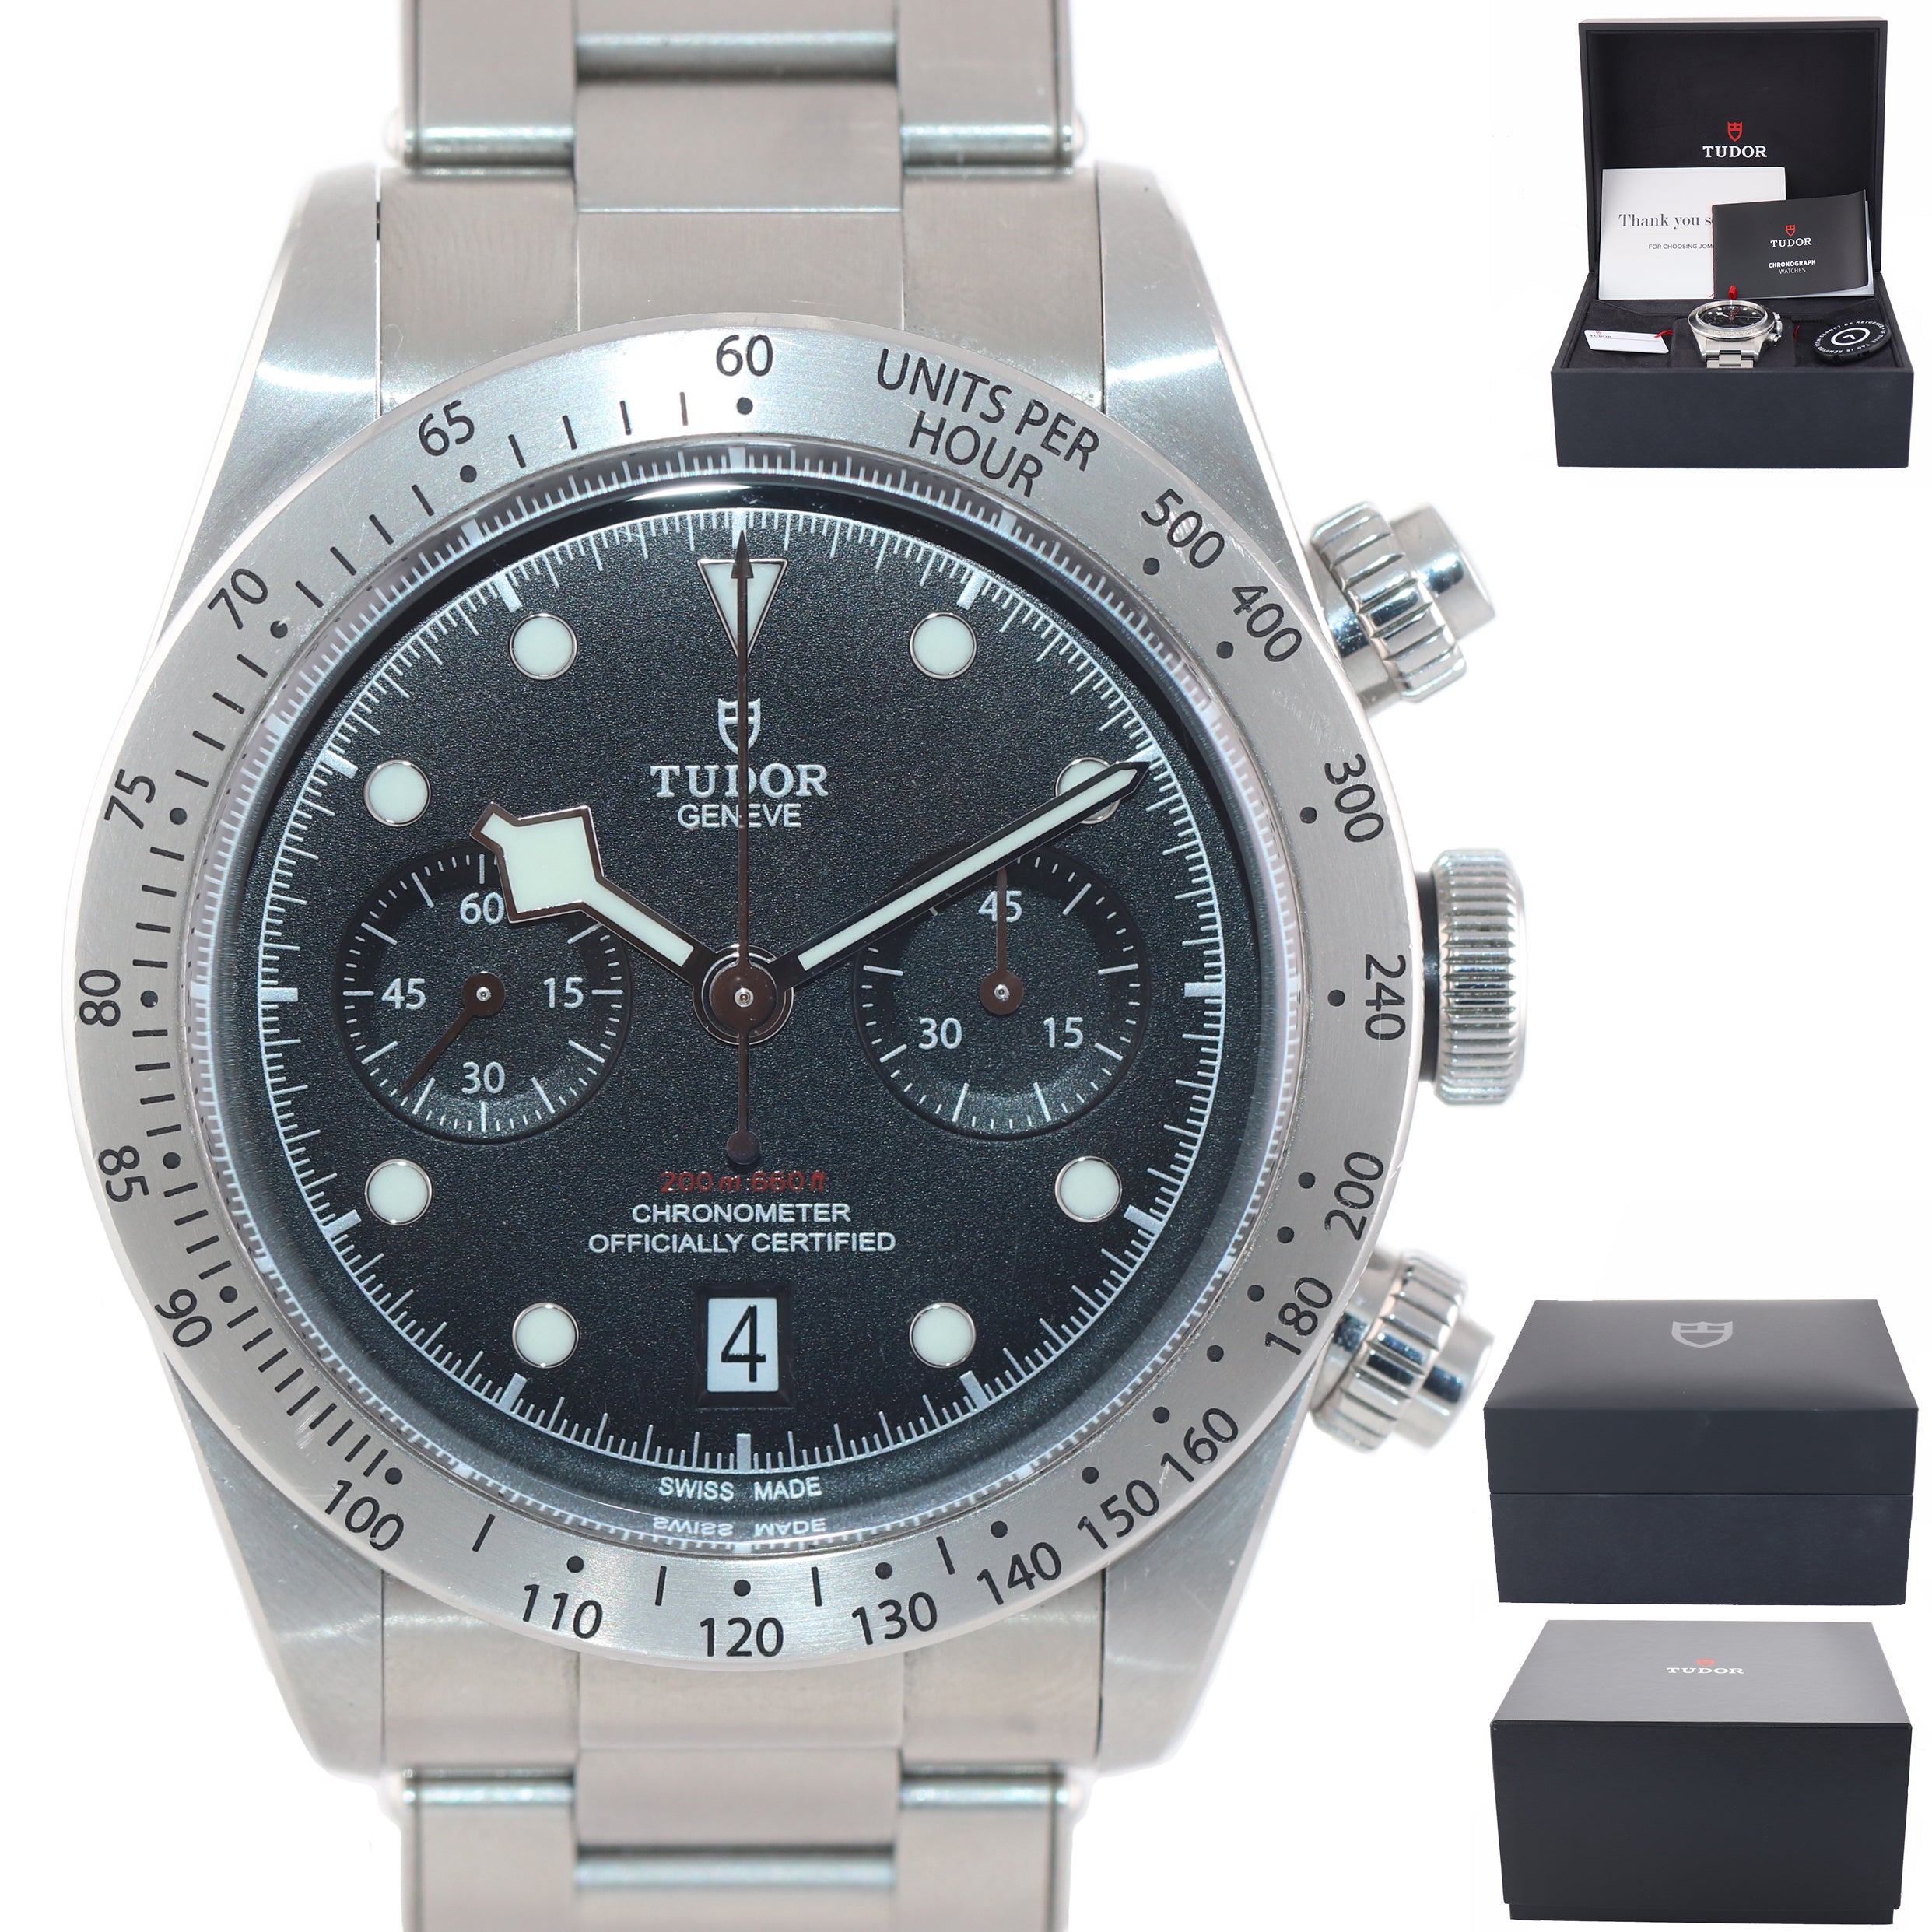 2019 Tudor Black Bay Heritage Chronograph 79350 Steel Black 41mm Date Watch